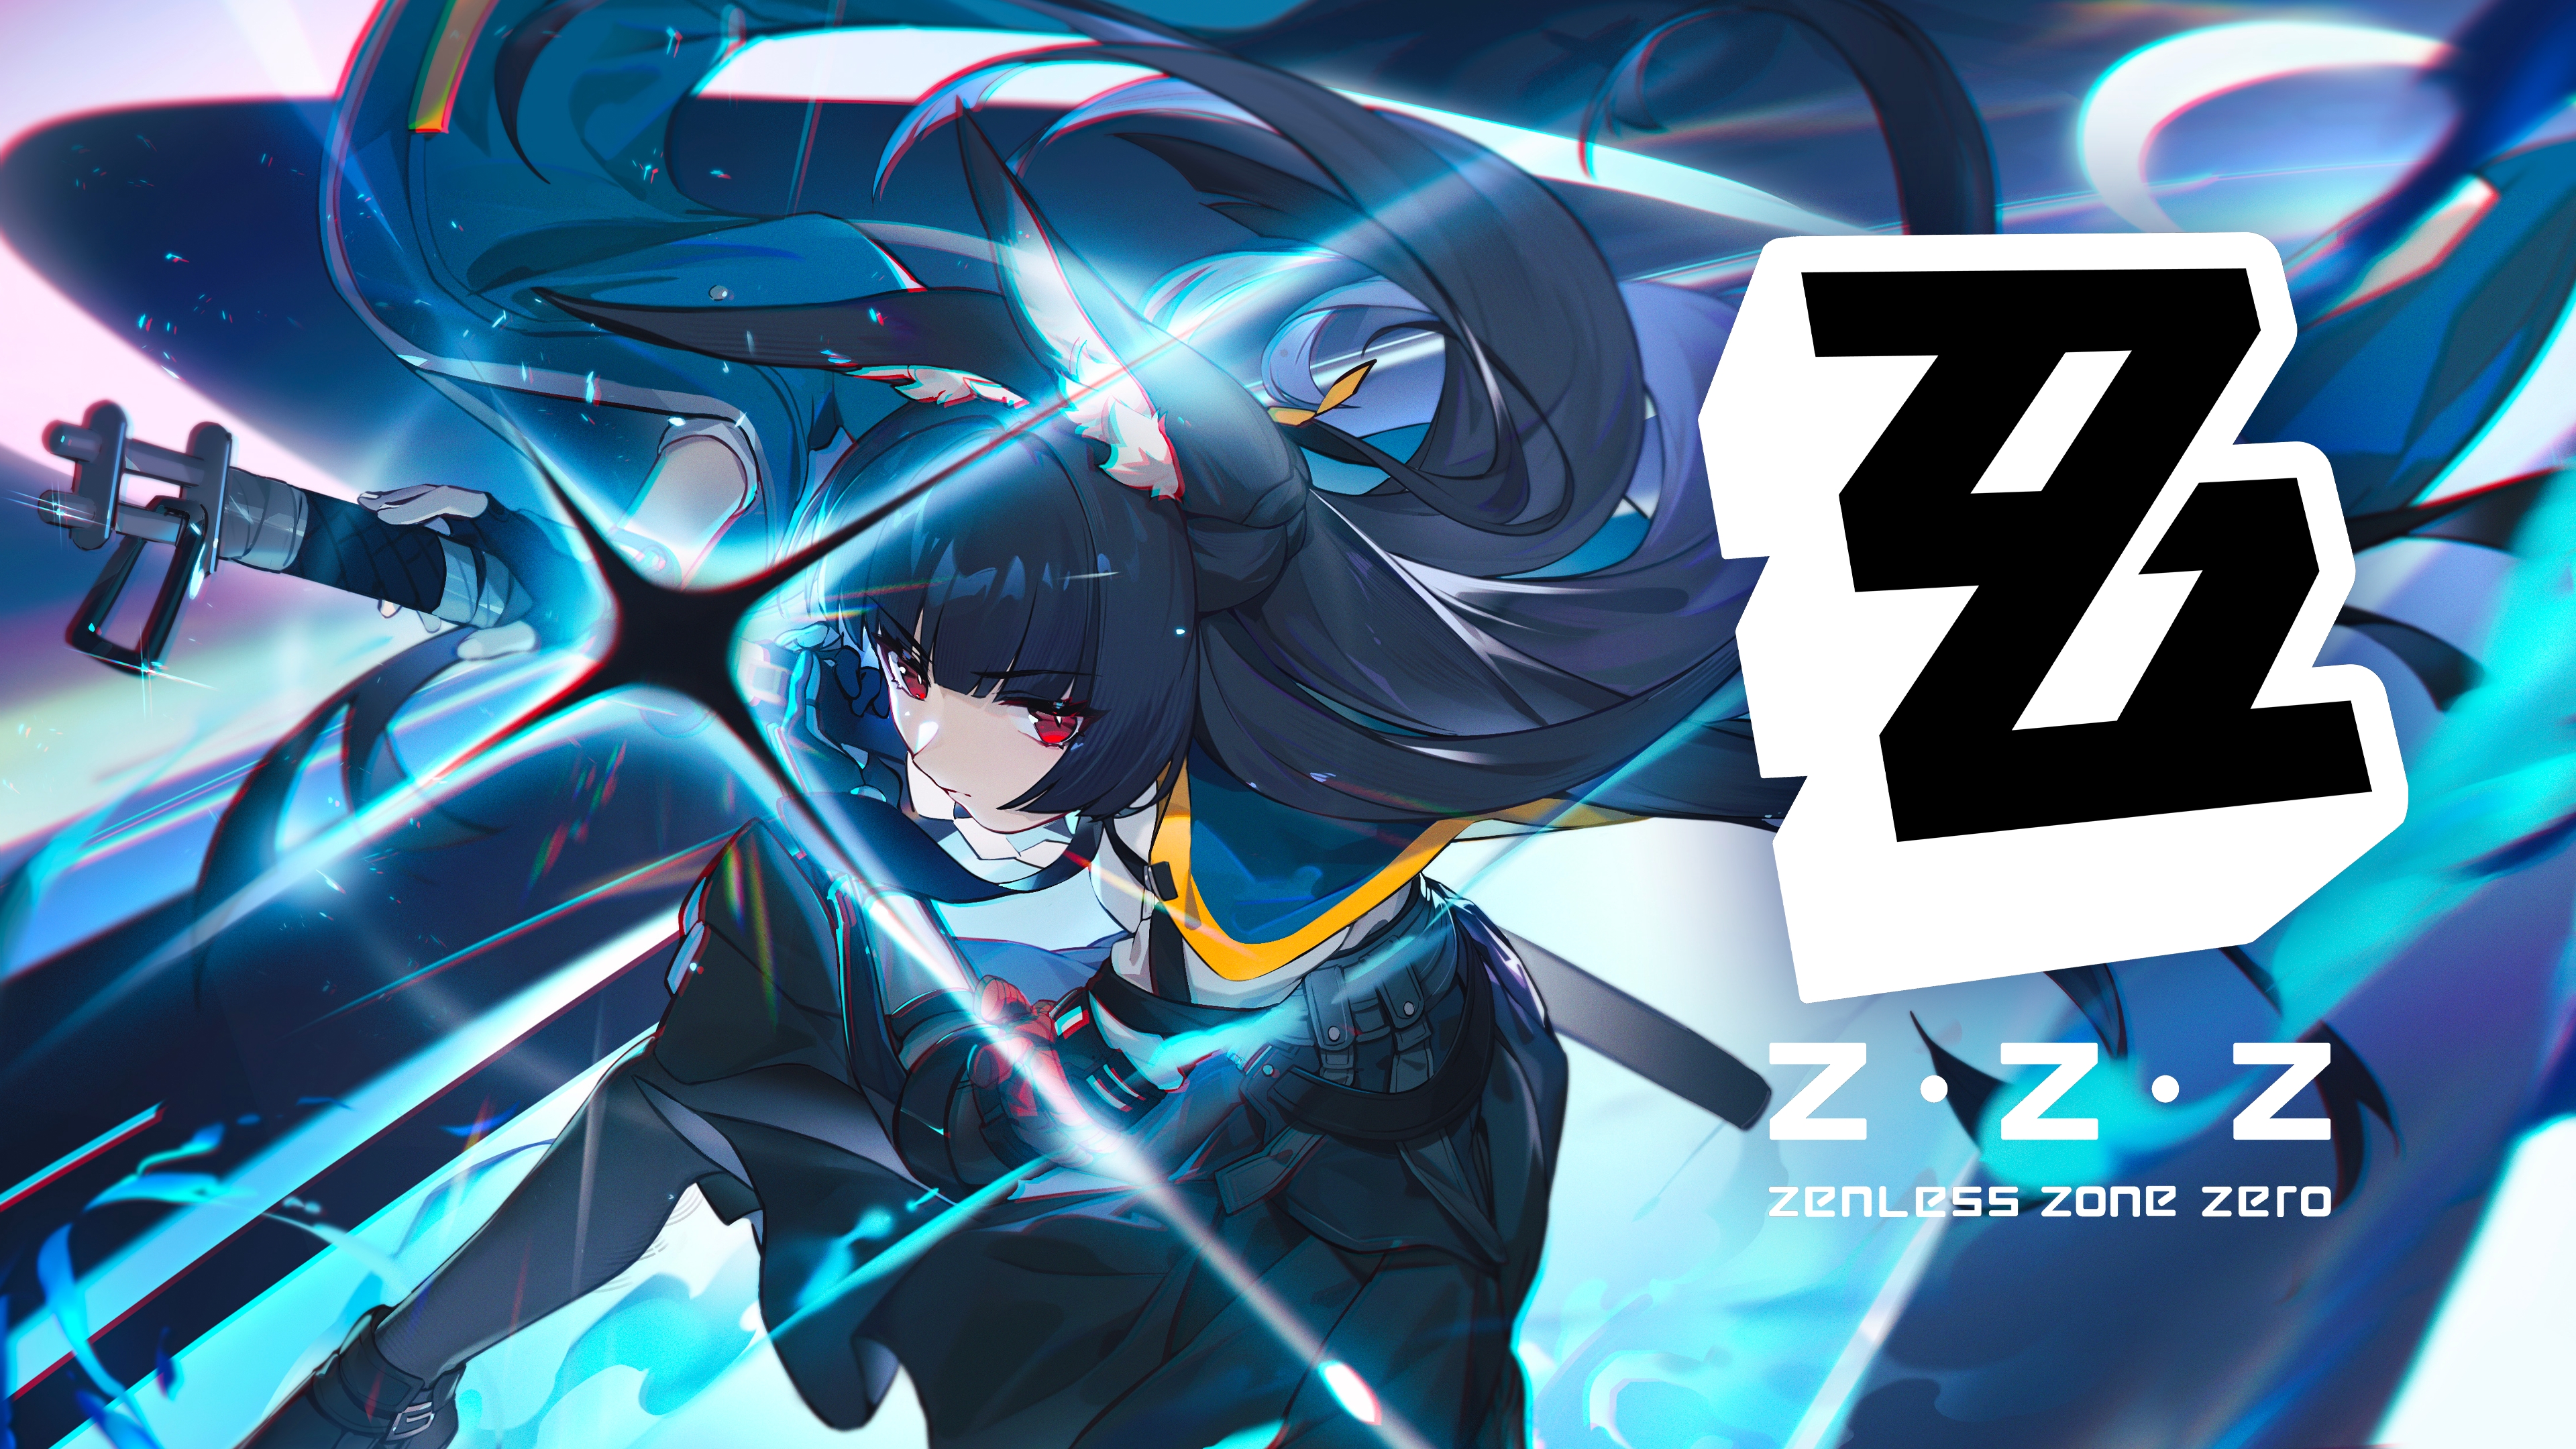 Zenless Zone Zero: conheça o game - Olhar Digital